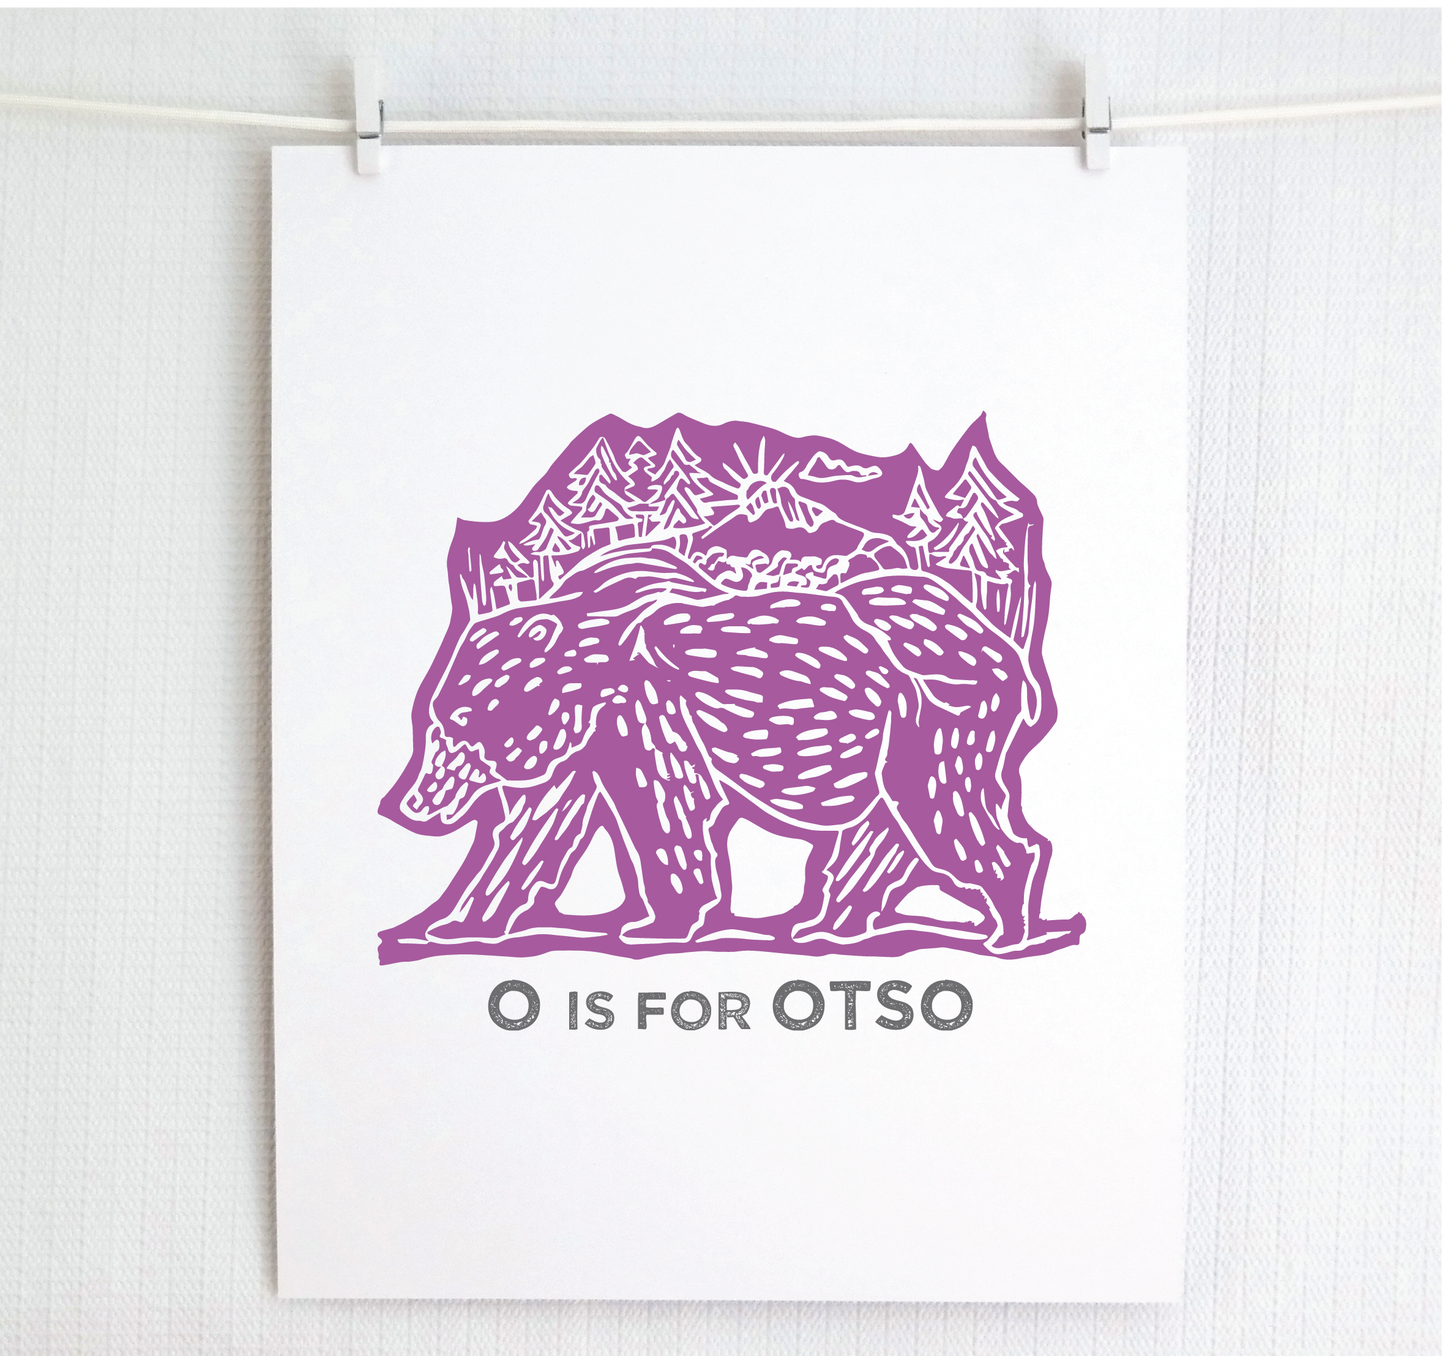 O is for Otso